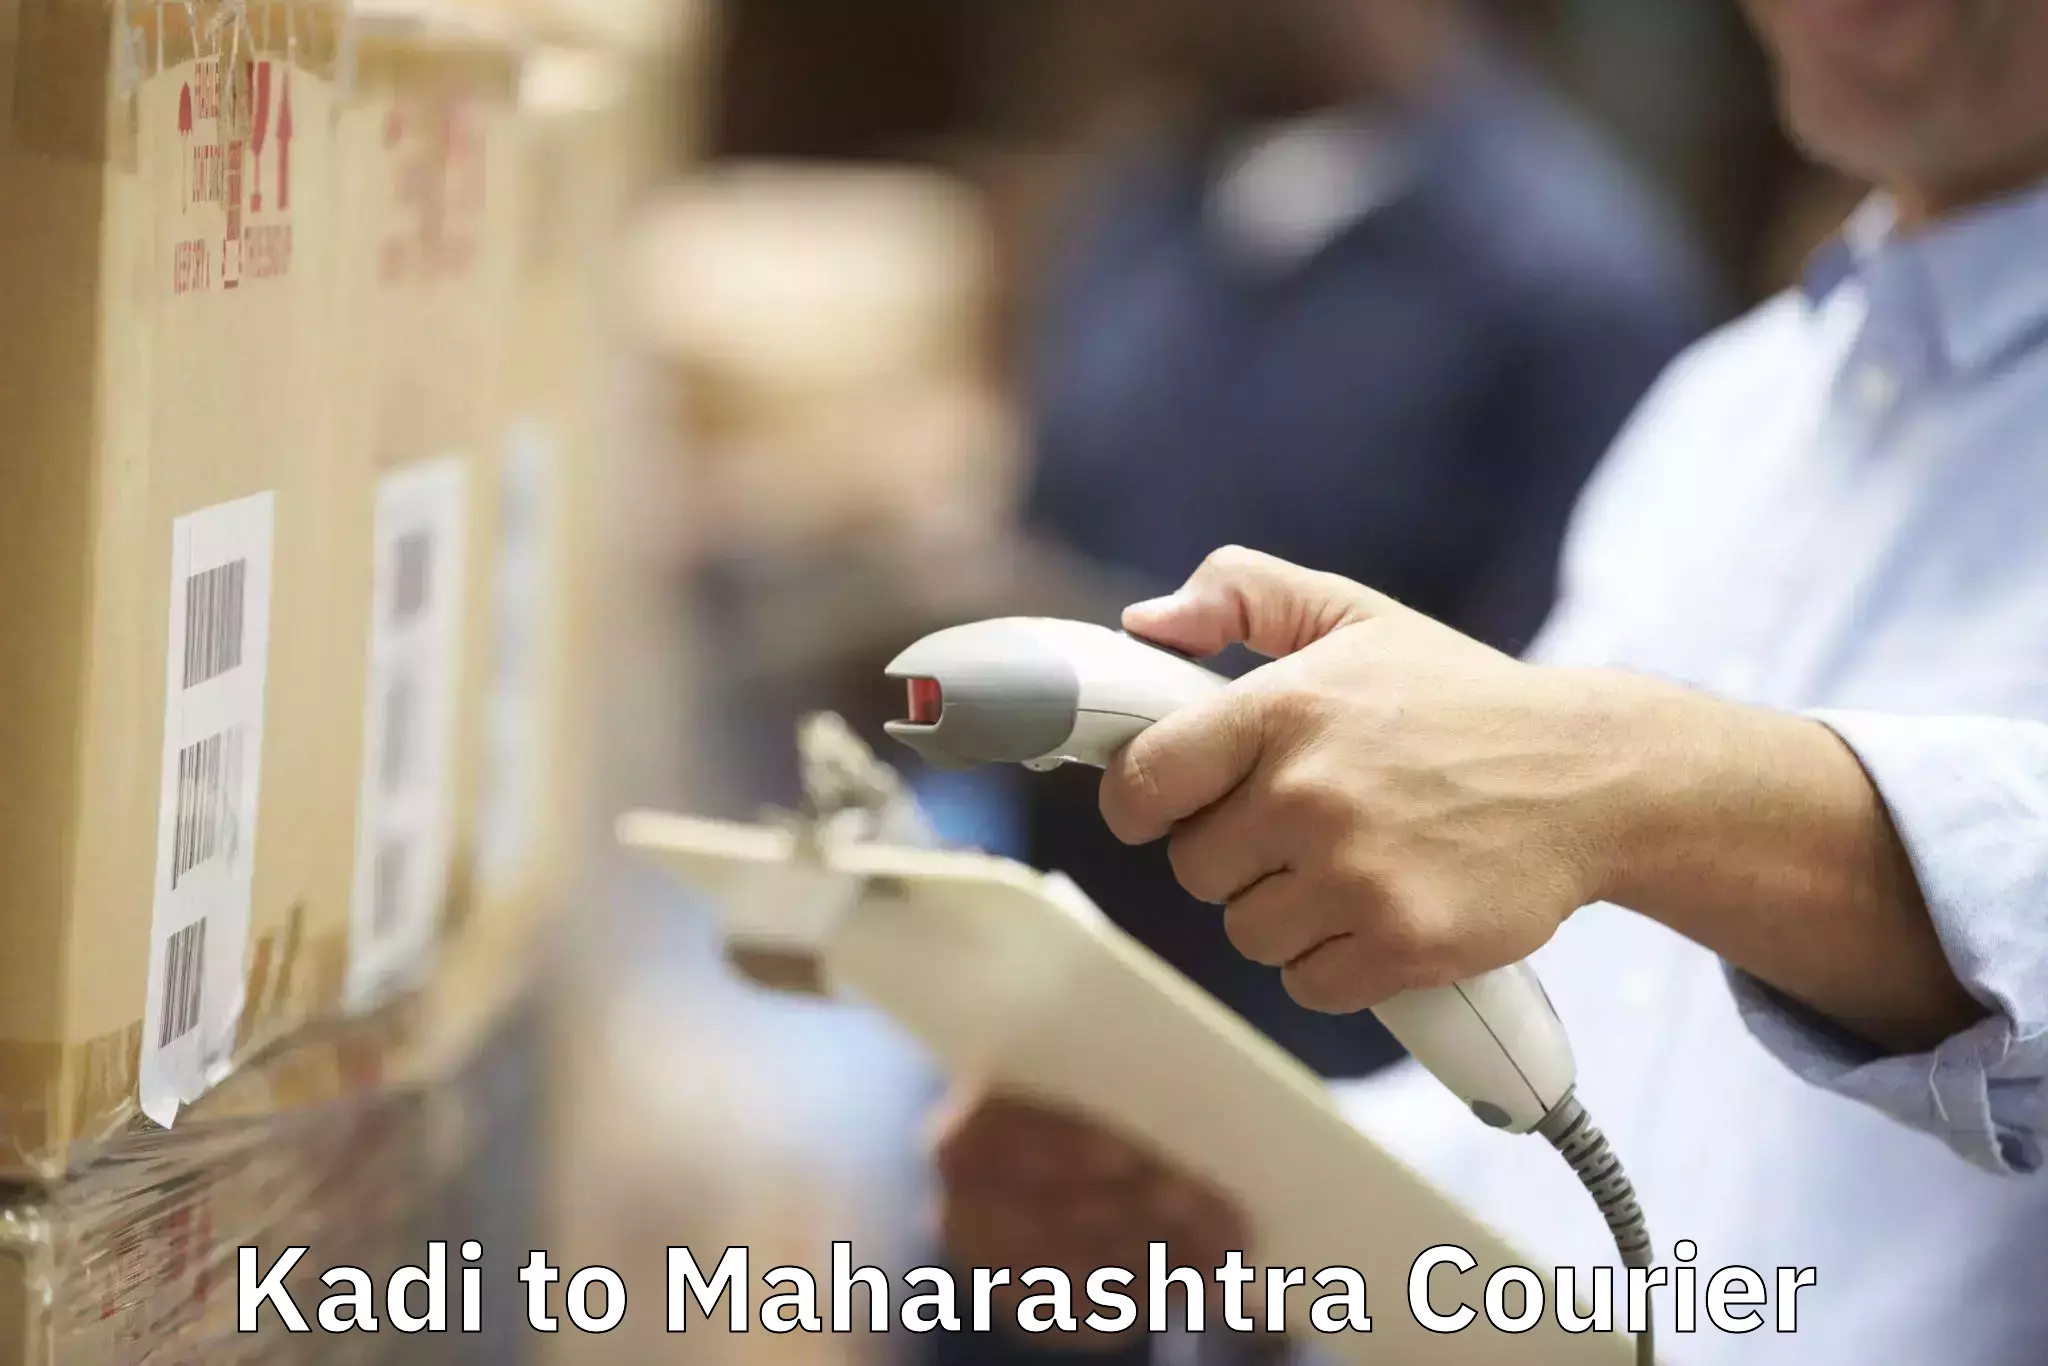 Professional furniture movers Kadi to Maharashtra